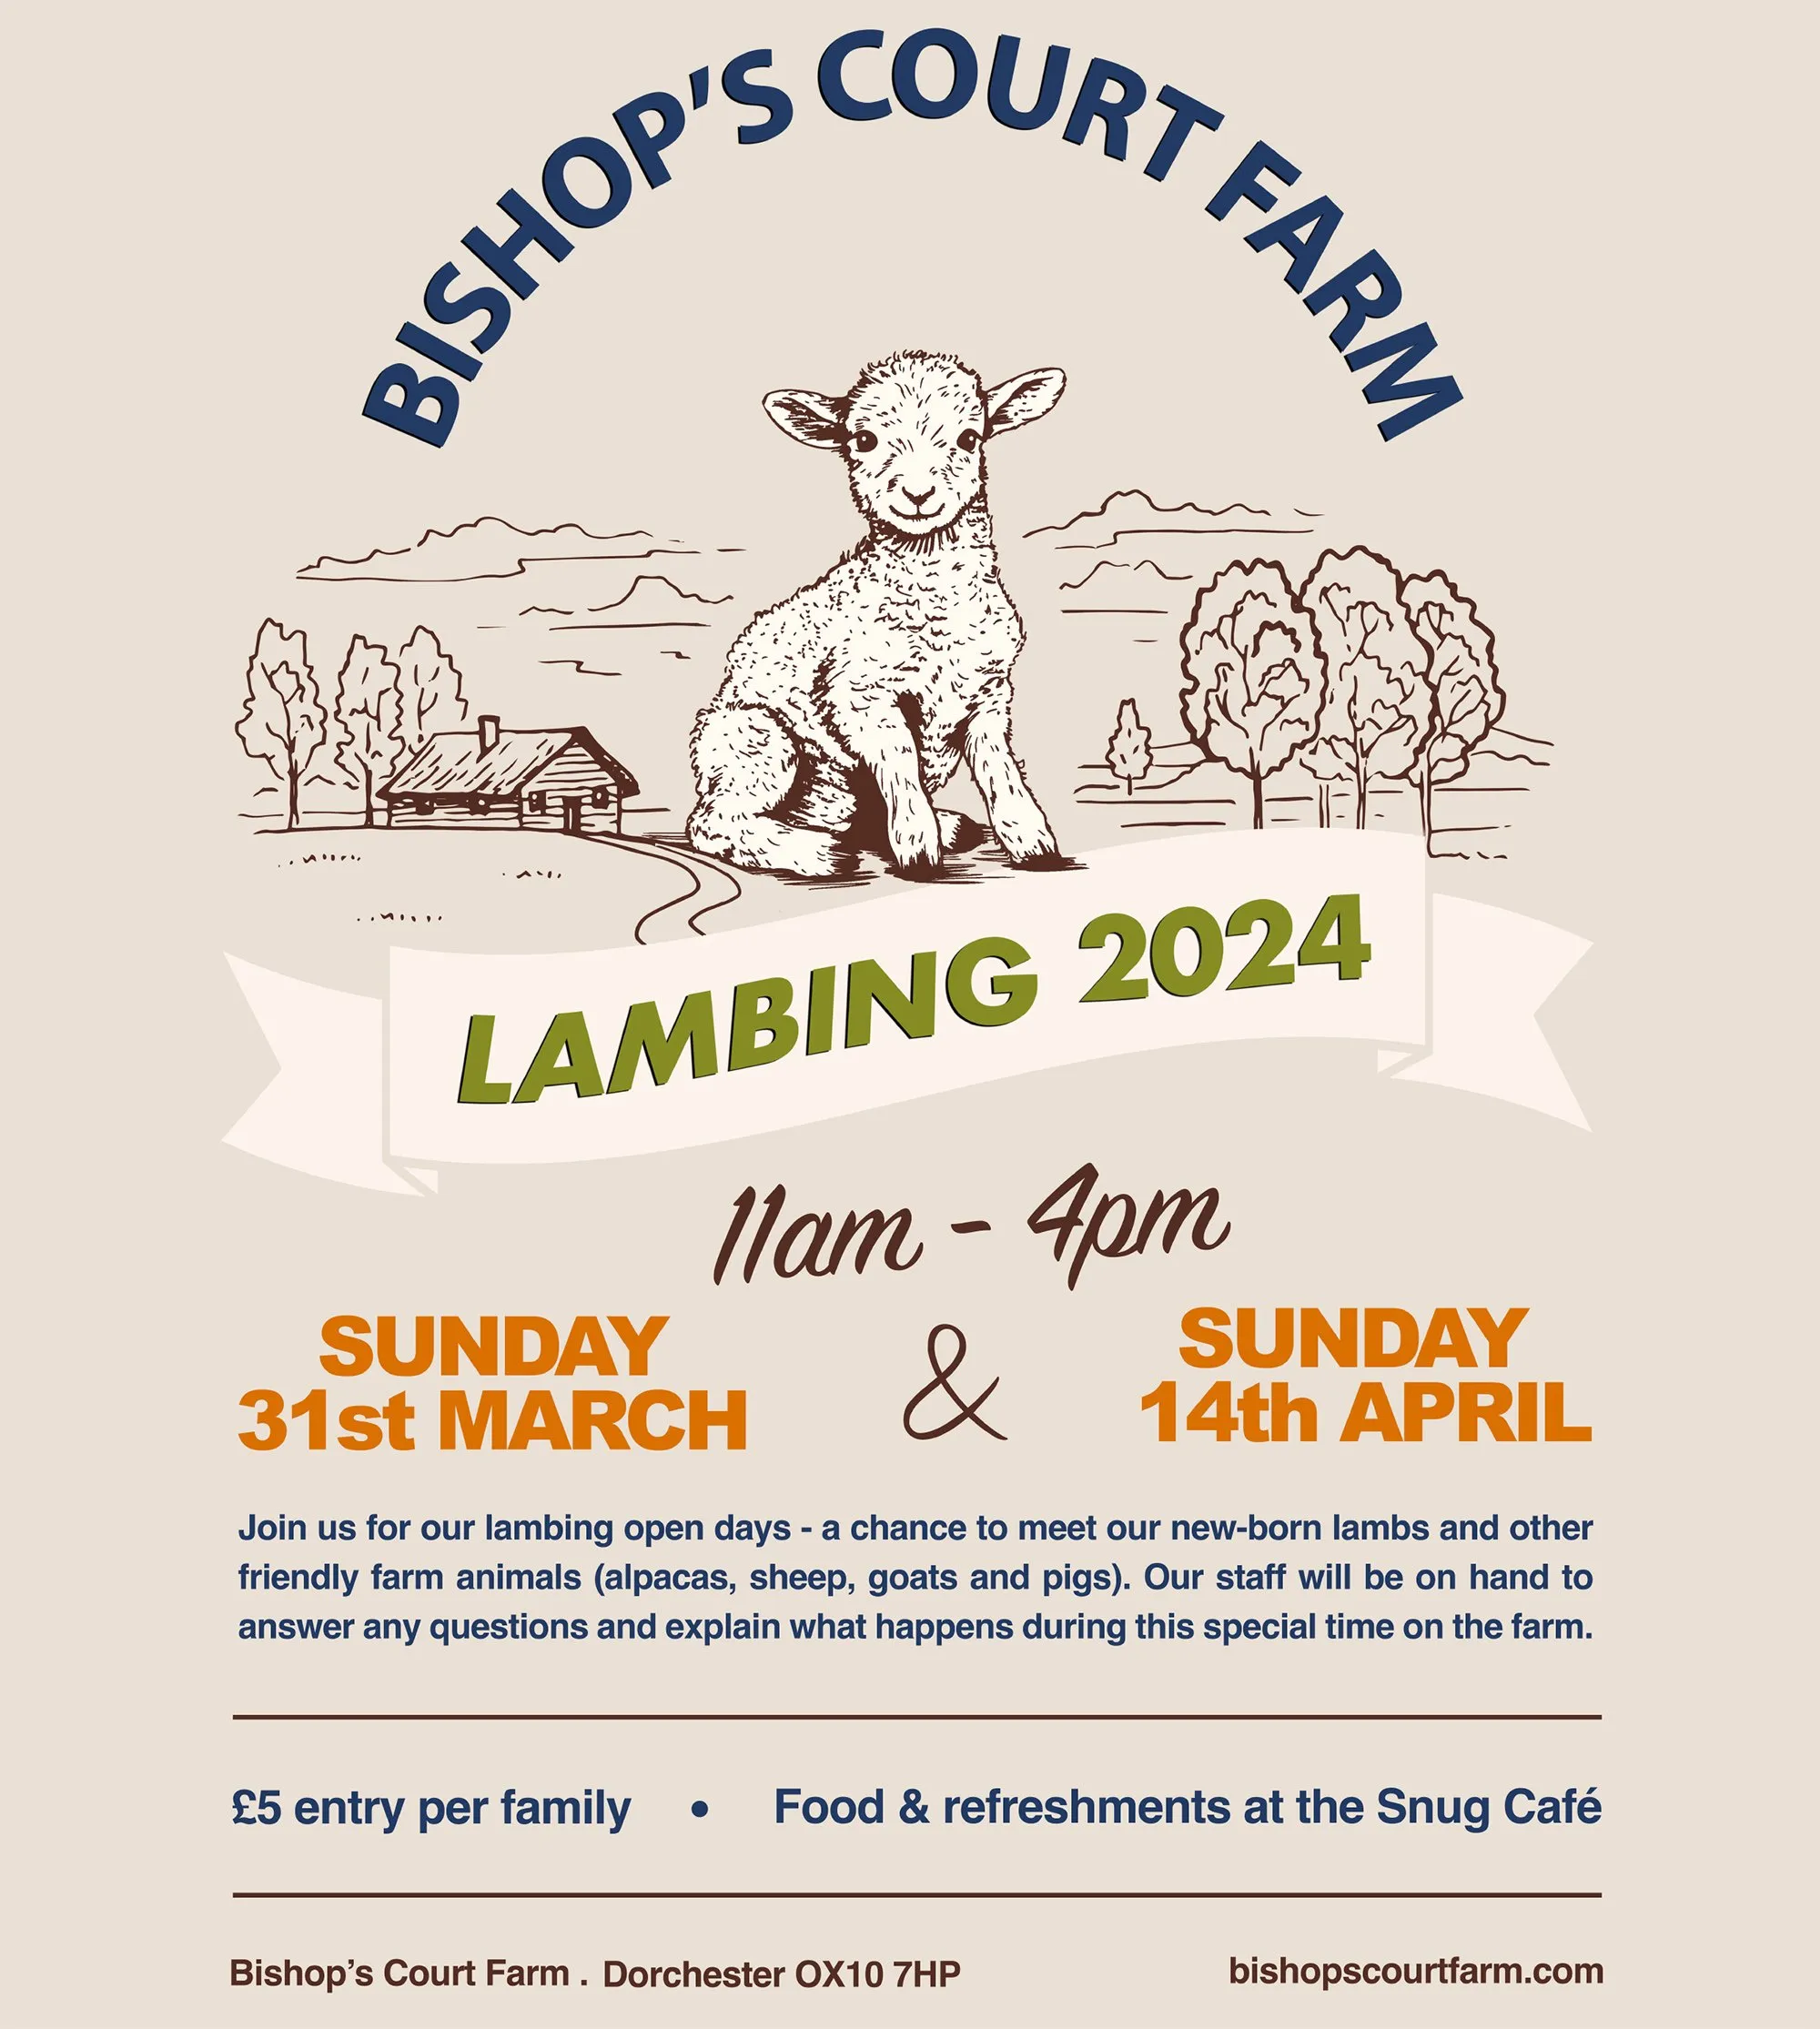 Bishops Court Farm: Lambing 2024